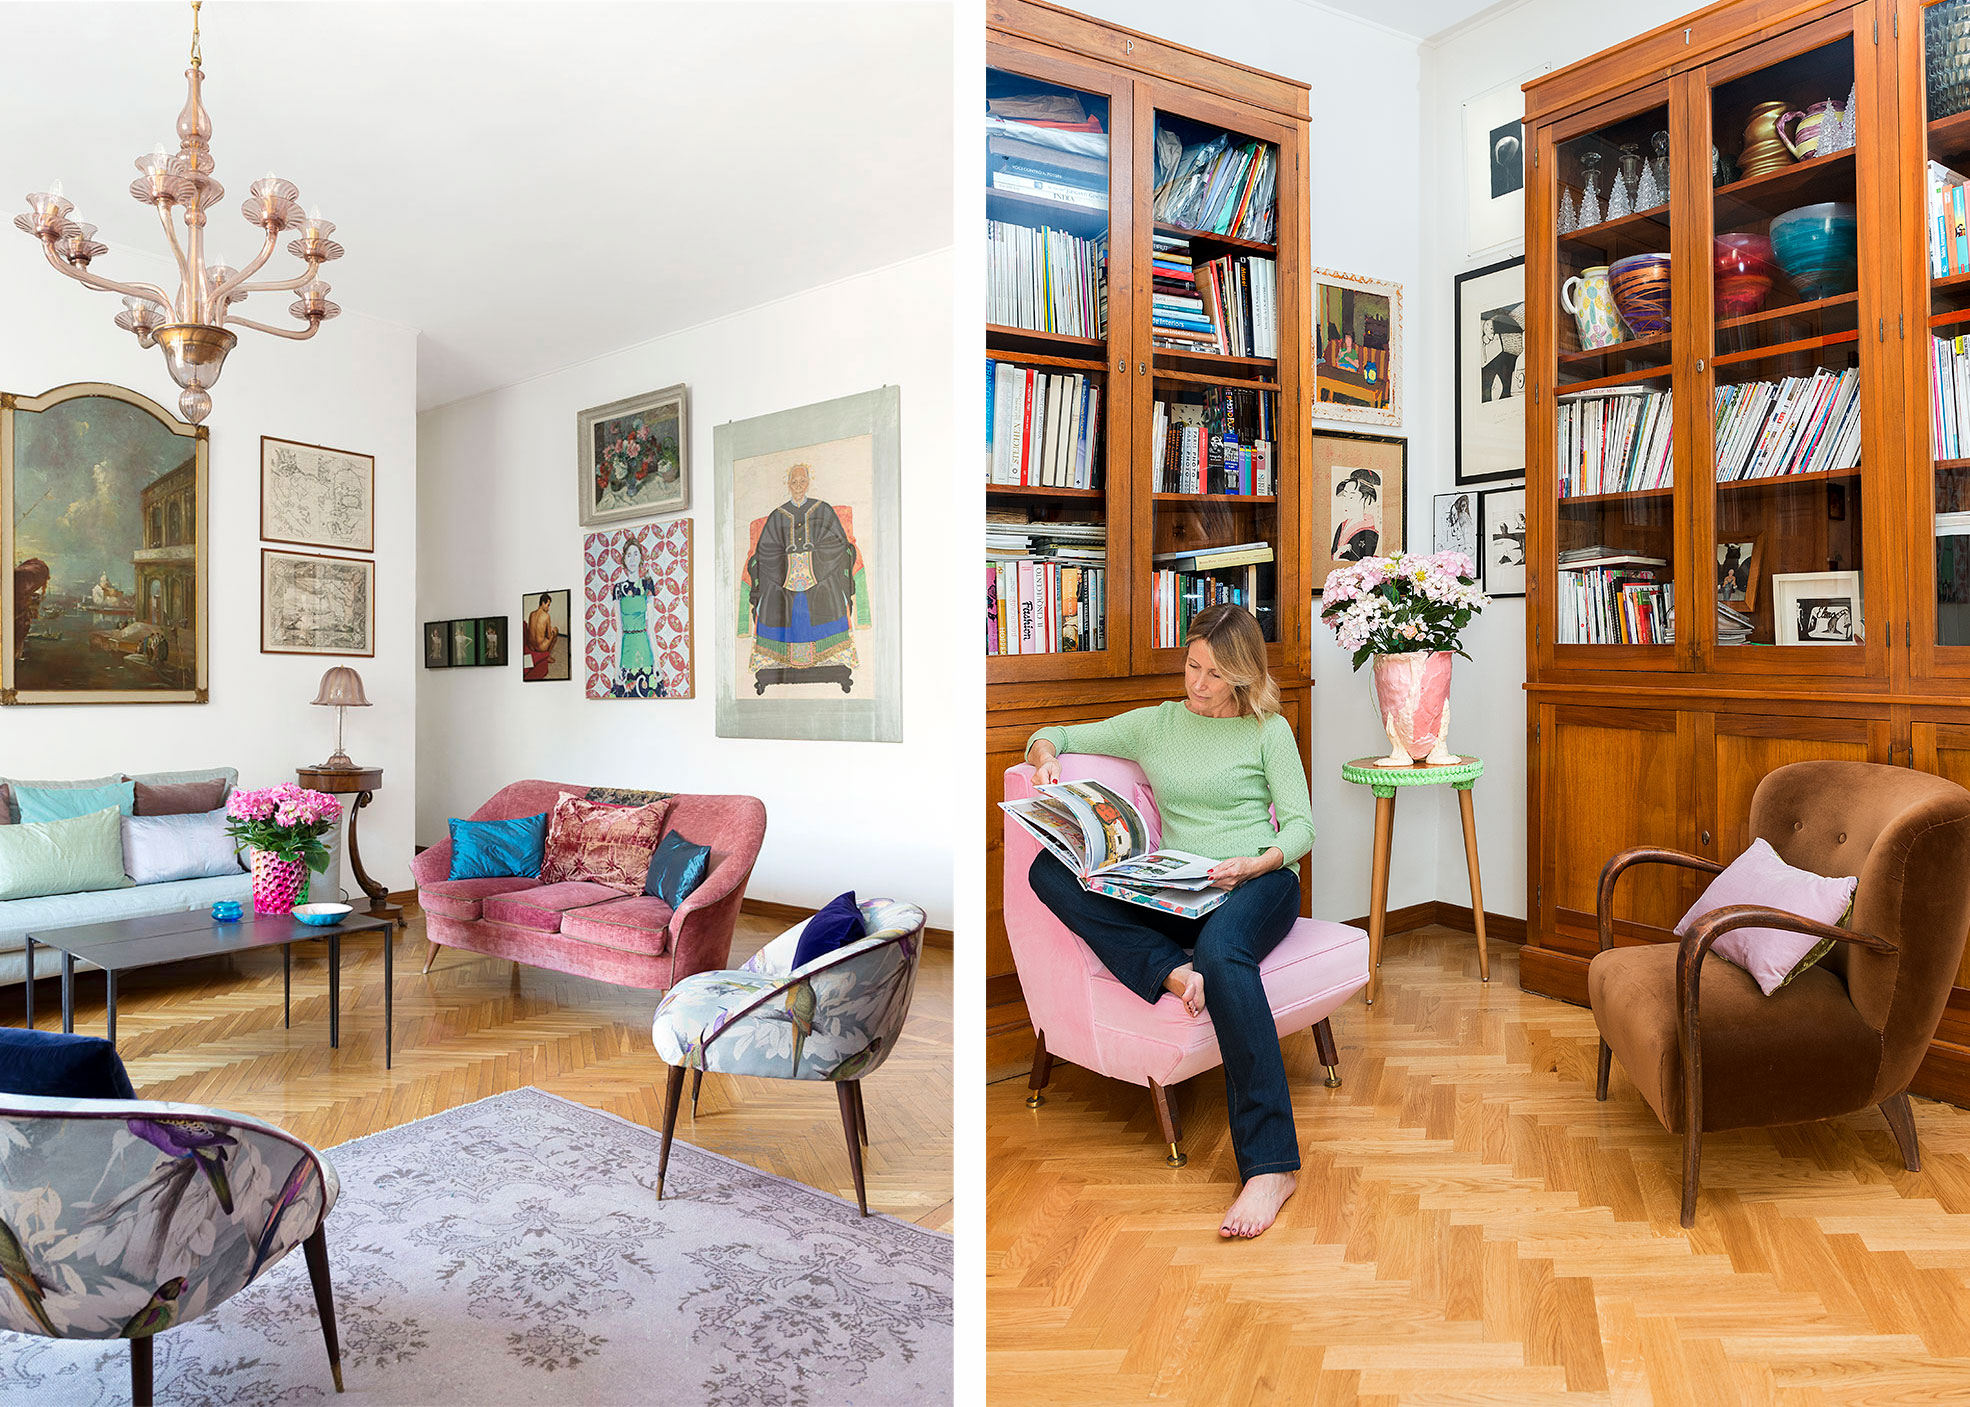 Elena Corner on a pink armchair in her living room Photographer Maria Teresa Furnari